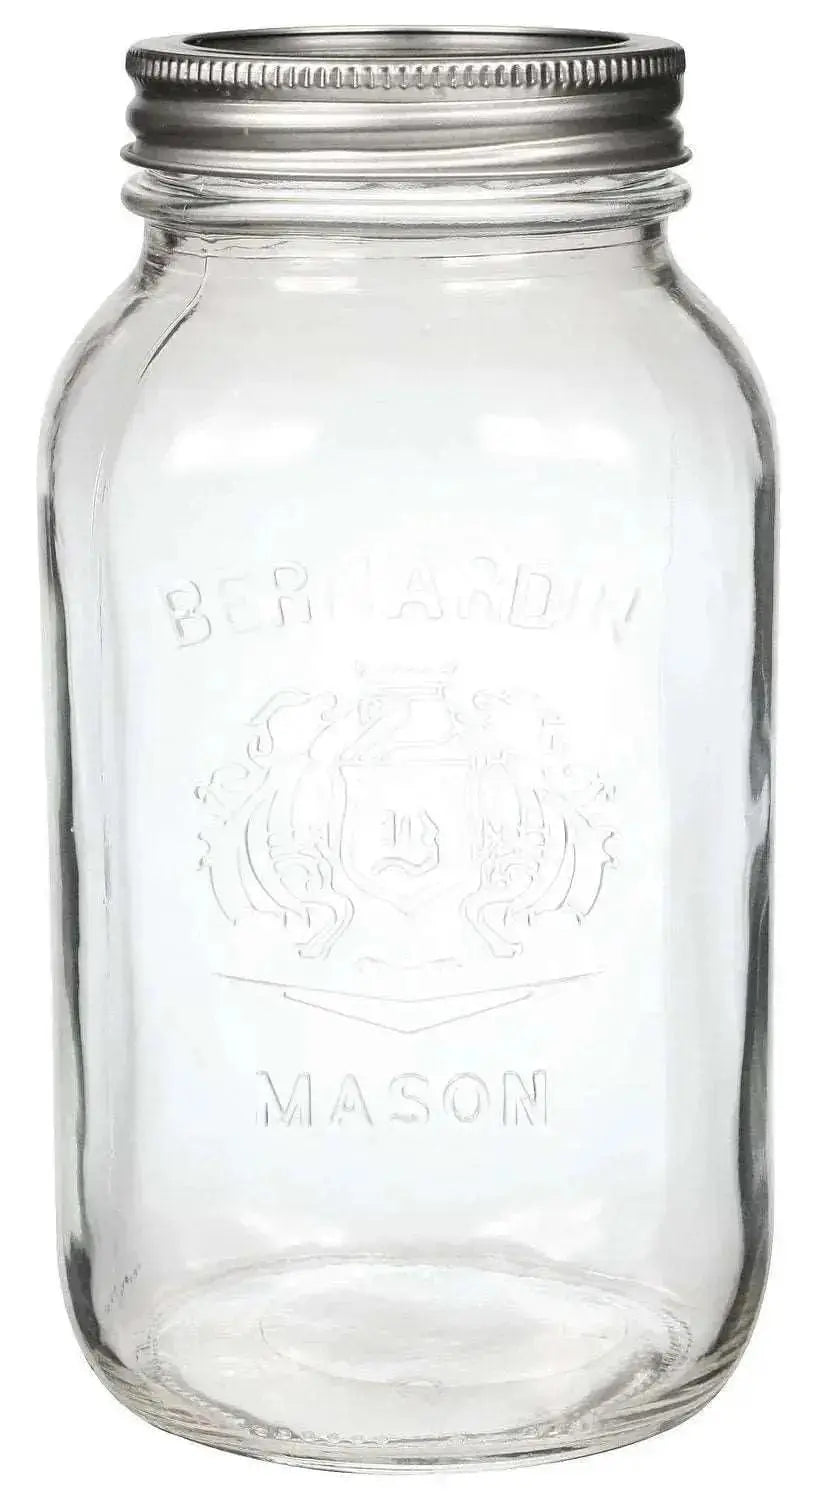 Bernardin Regular Mason Jar with Standard Lid  1 L MK Smith's Shop